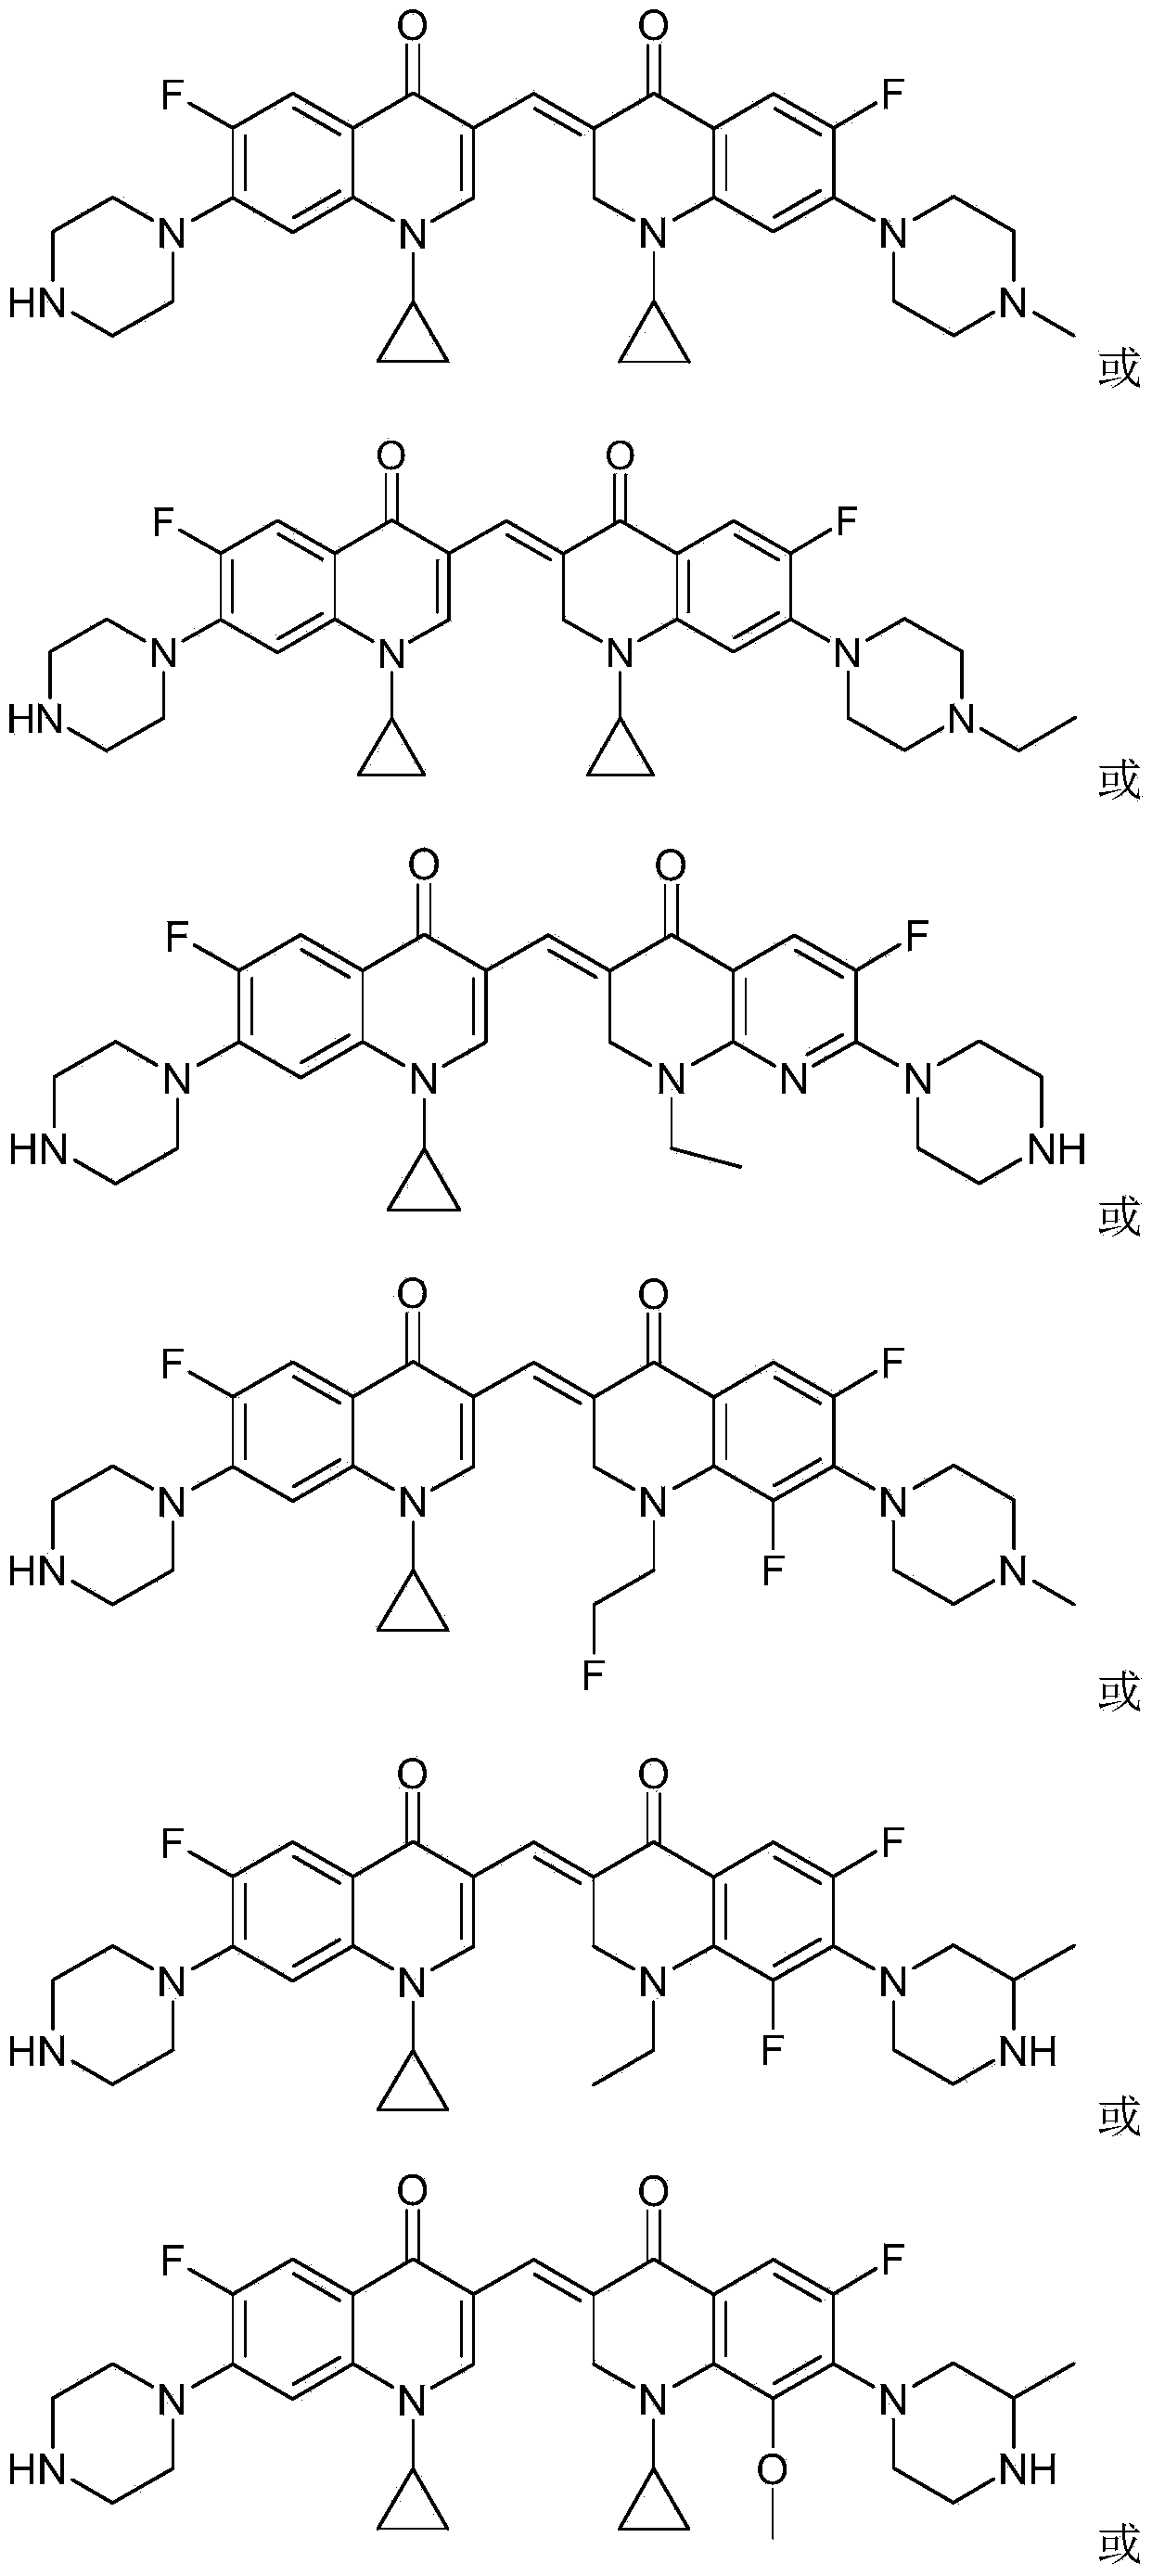 3,3'-methylene-bisfluoroquinolone derivative containing cyclopropylquinoline ring as well as preparation method and application of 3,3'-methylene-bisfluoroquinolone derivative